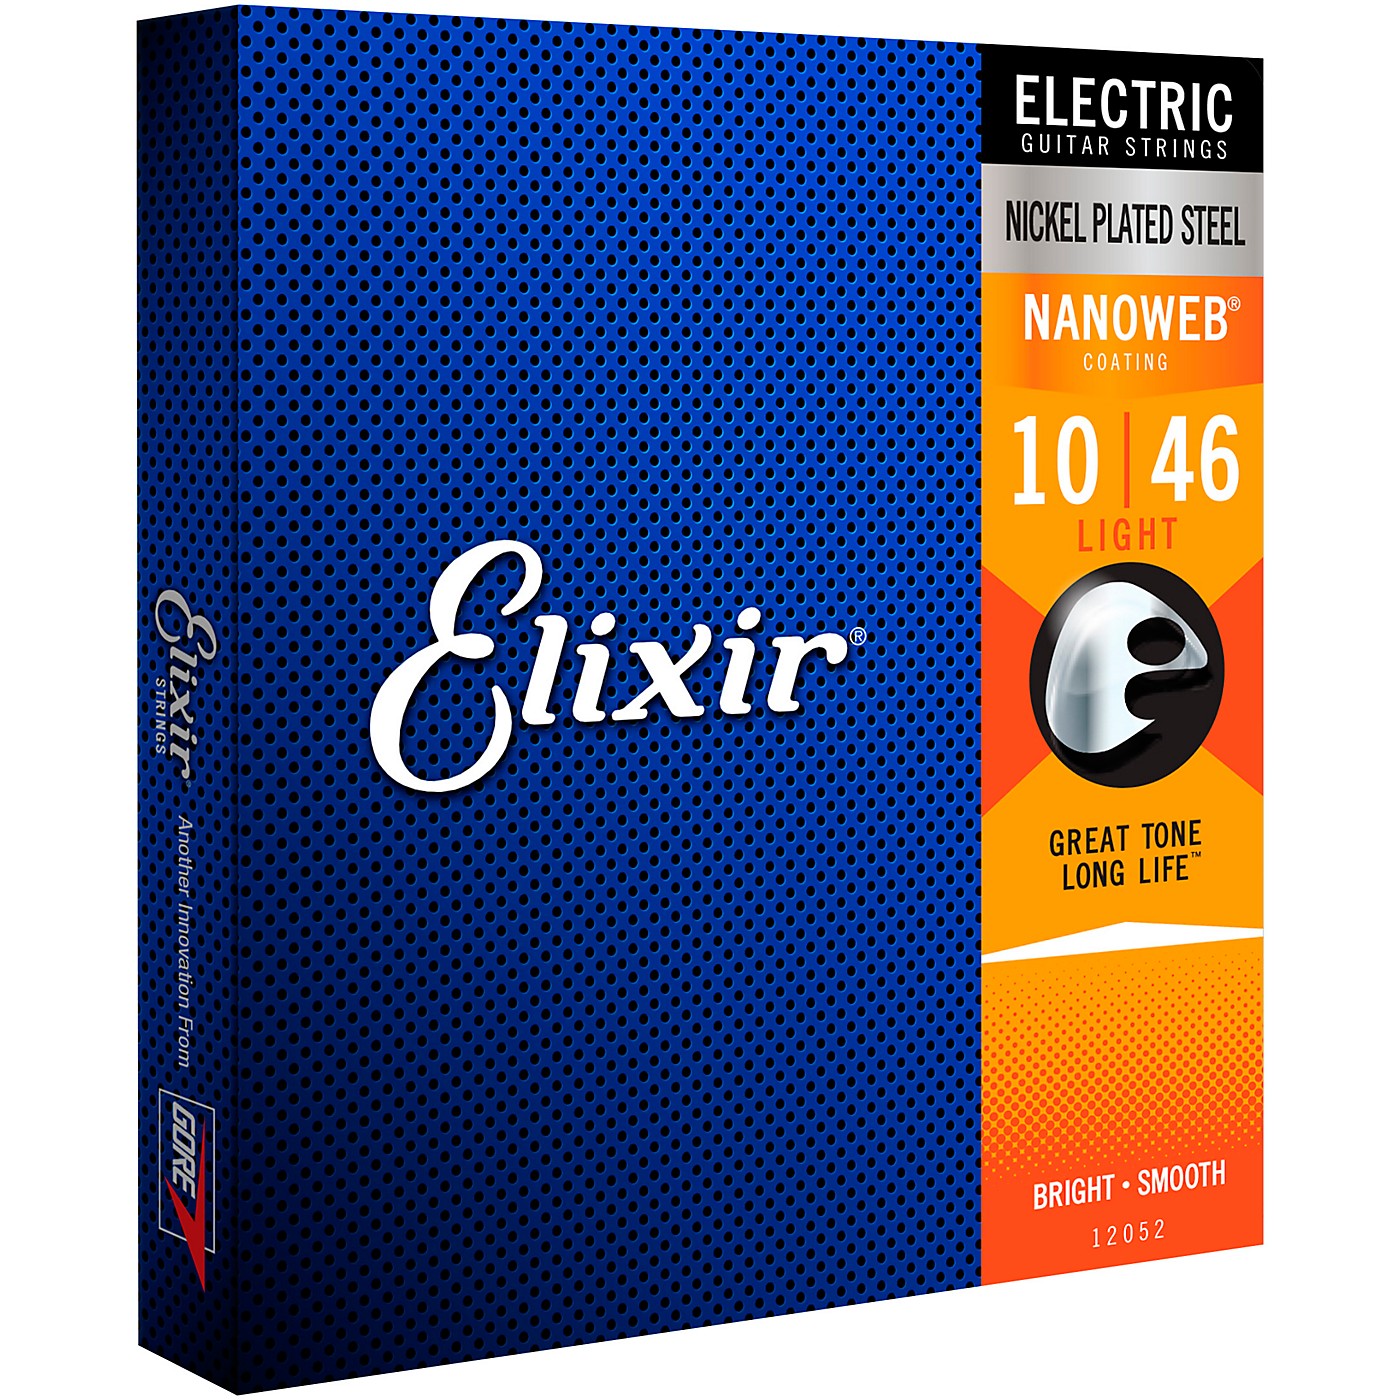 Elixir Electric Guitar Strings with NANOWEB Coating, Light (.010-.046) thumbnail